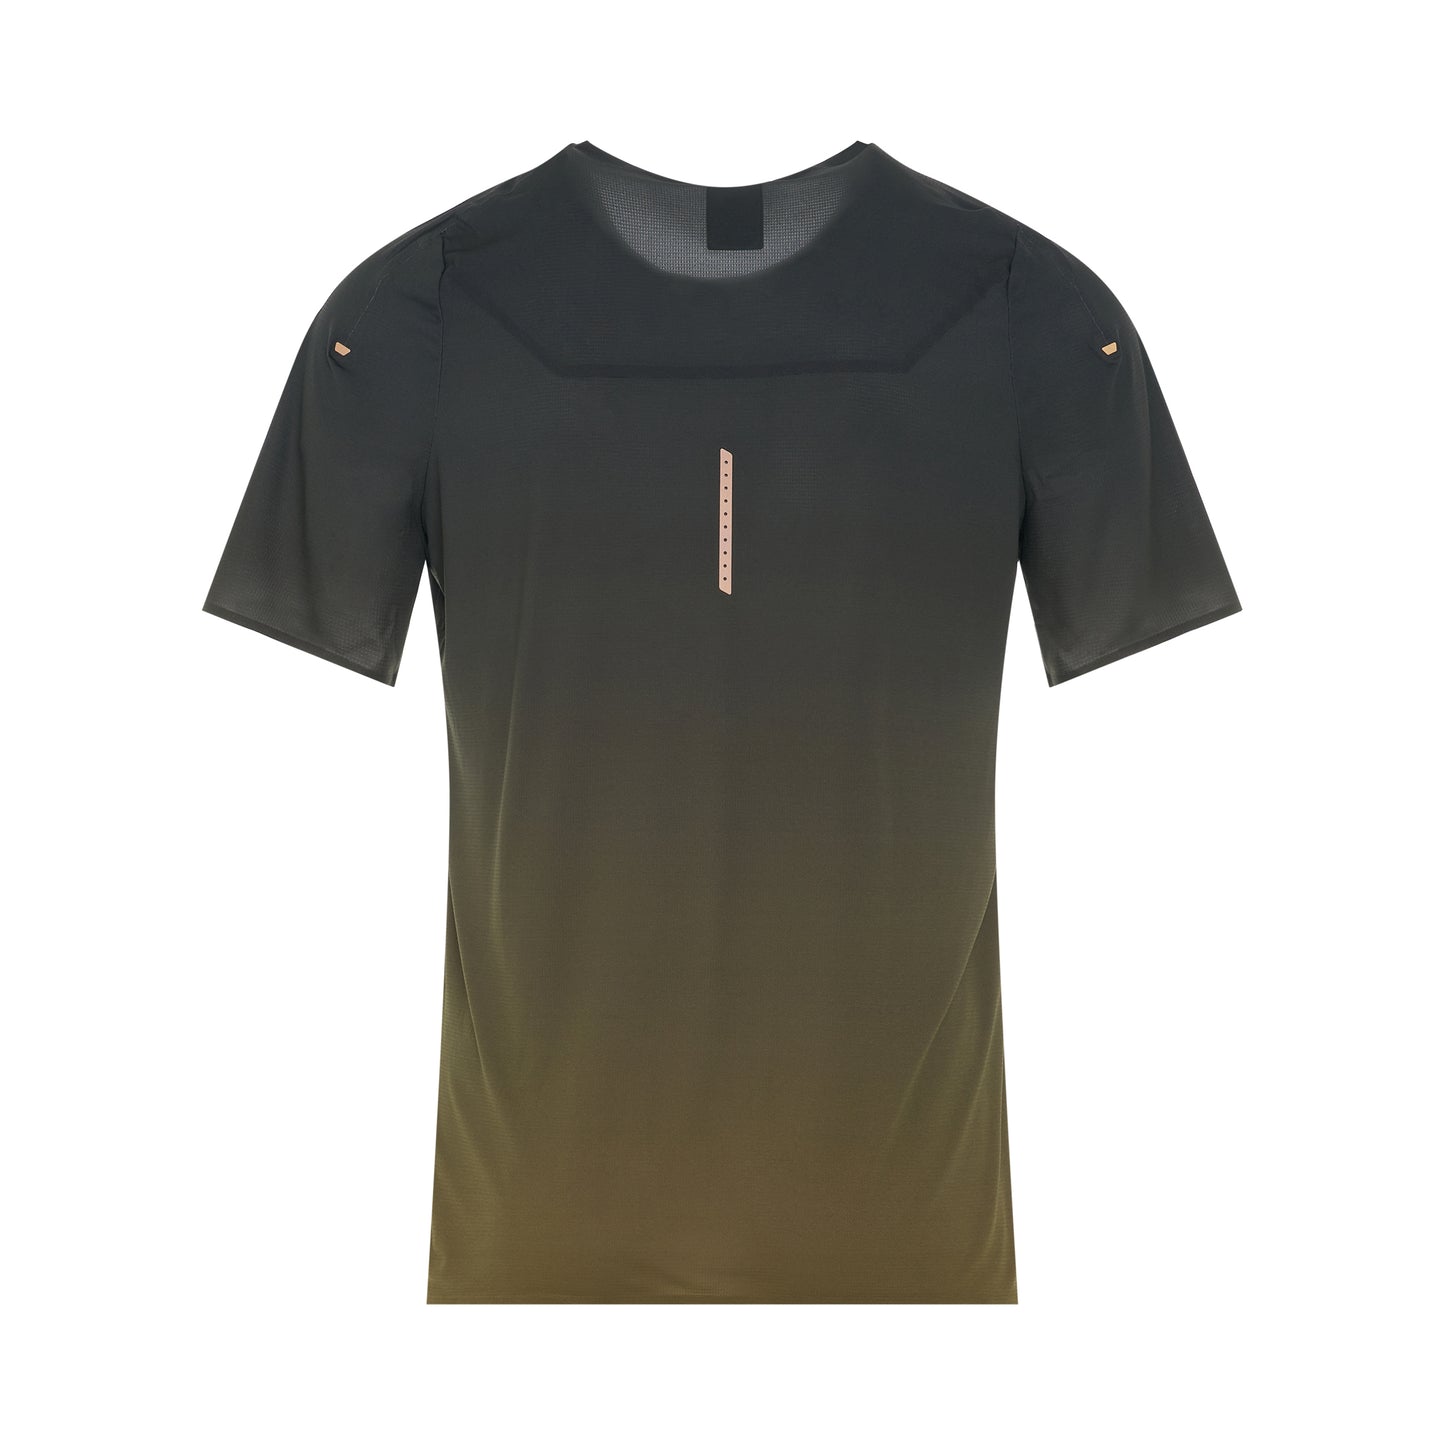 Loewe x ON Performance T-Shirt in Gradient Khaki